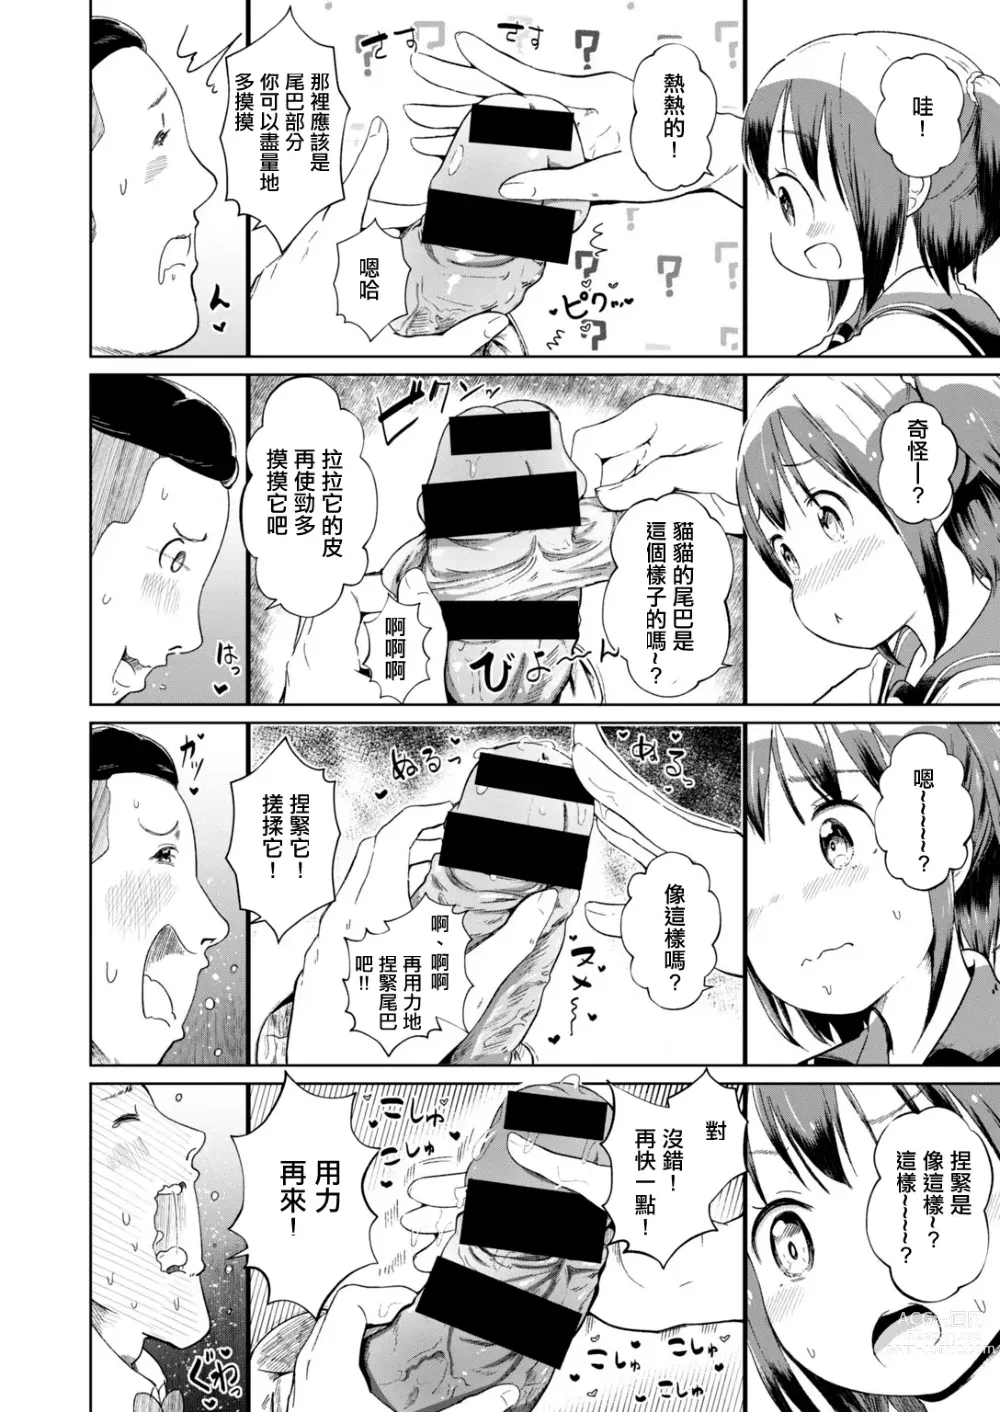 Page 4 of manga  事件發生!! ~可疑人物和箱子裡面~